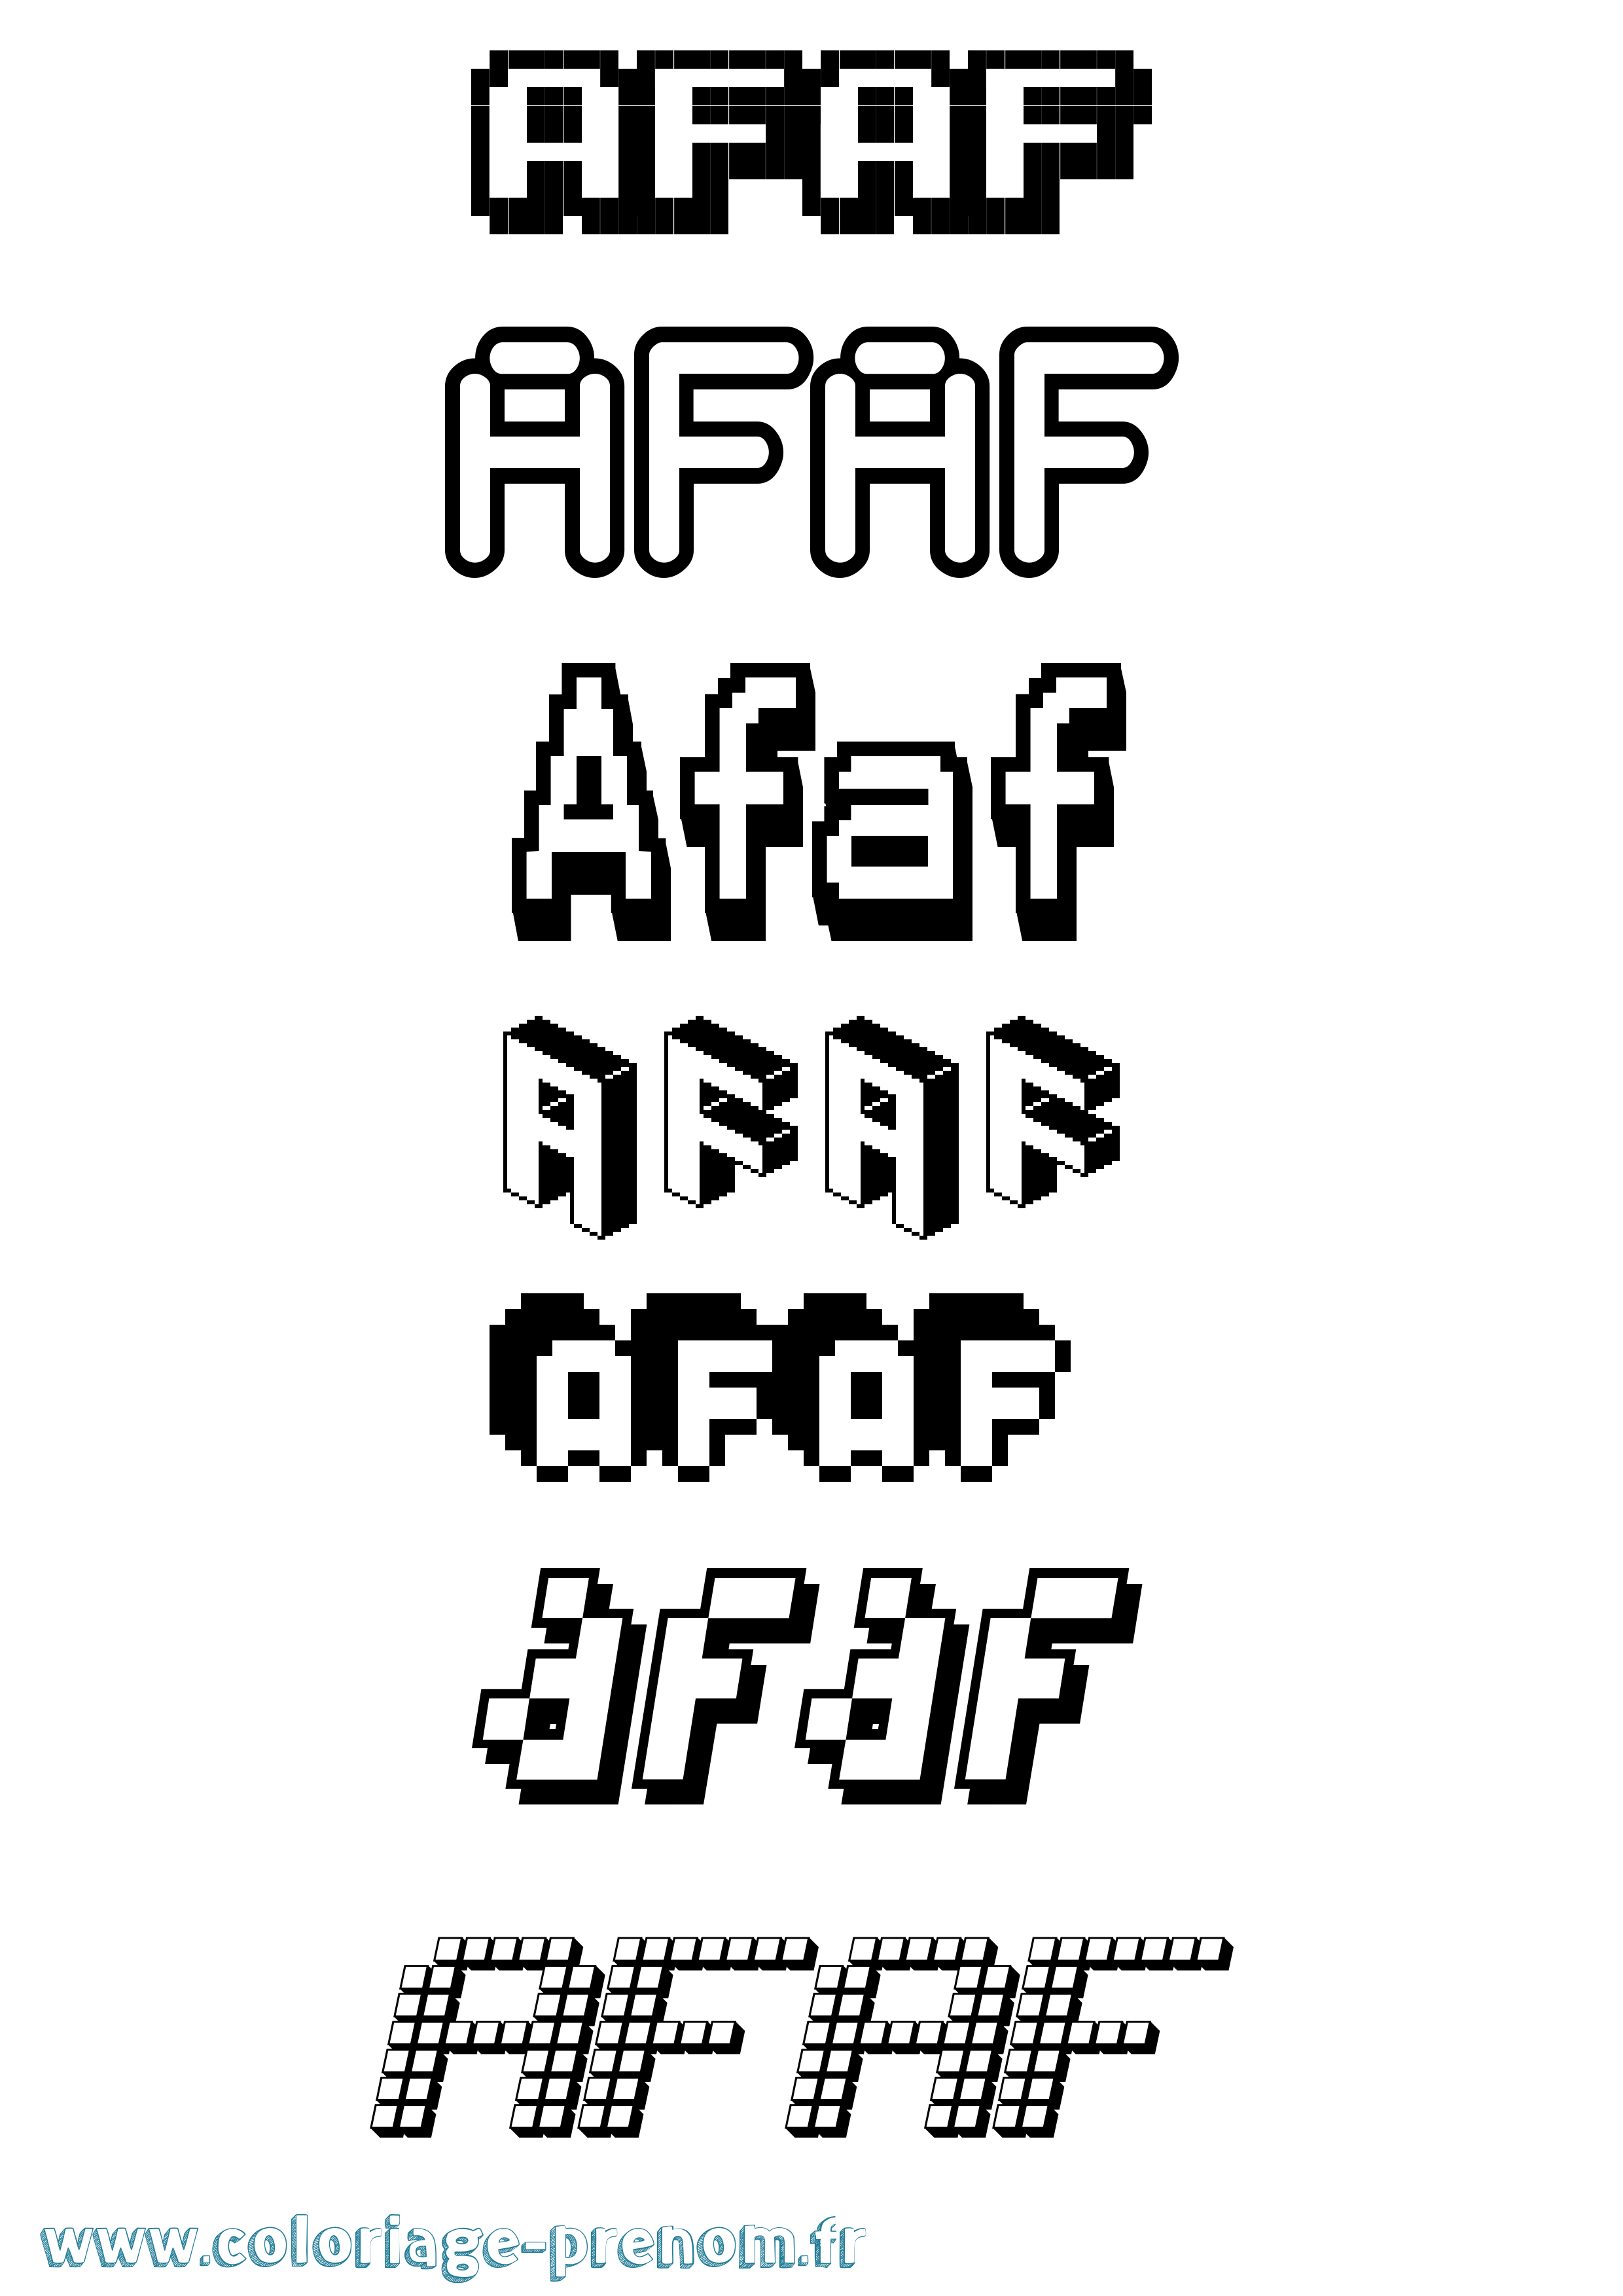 Coloriage prénom Afaf Pixel